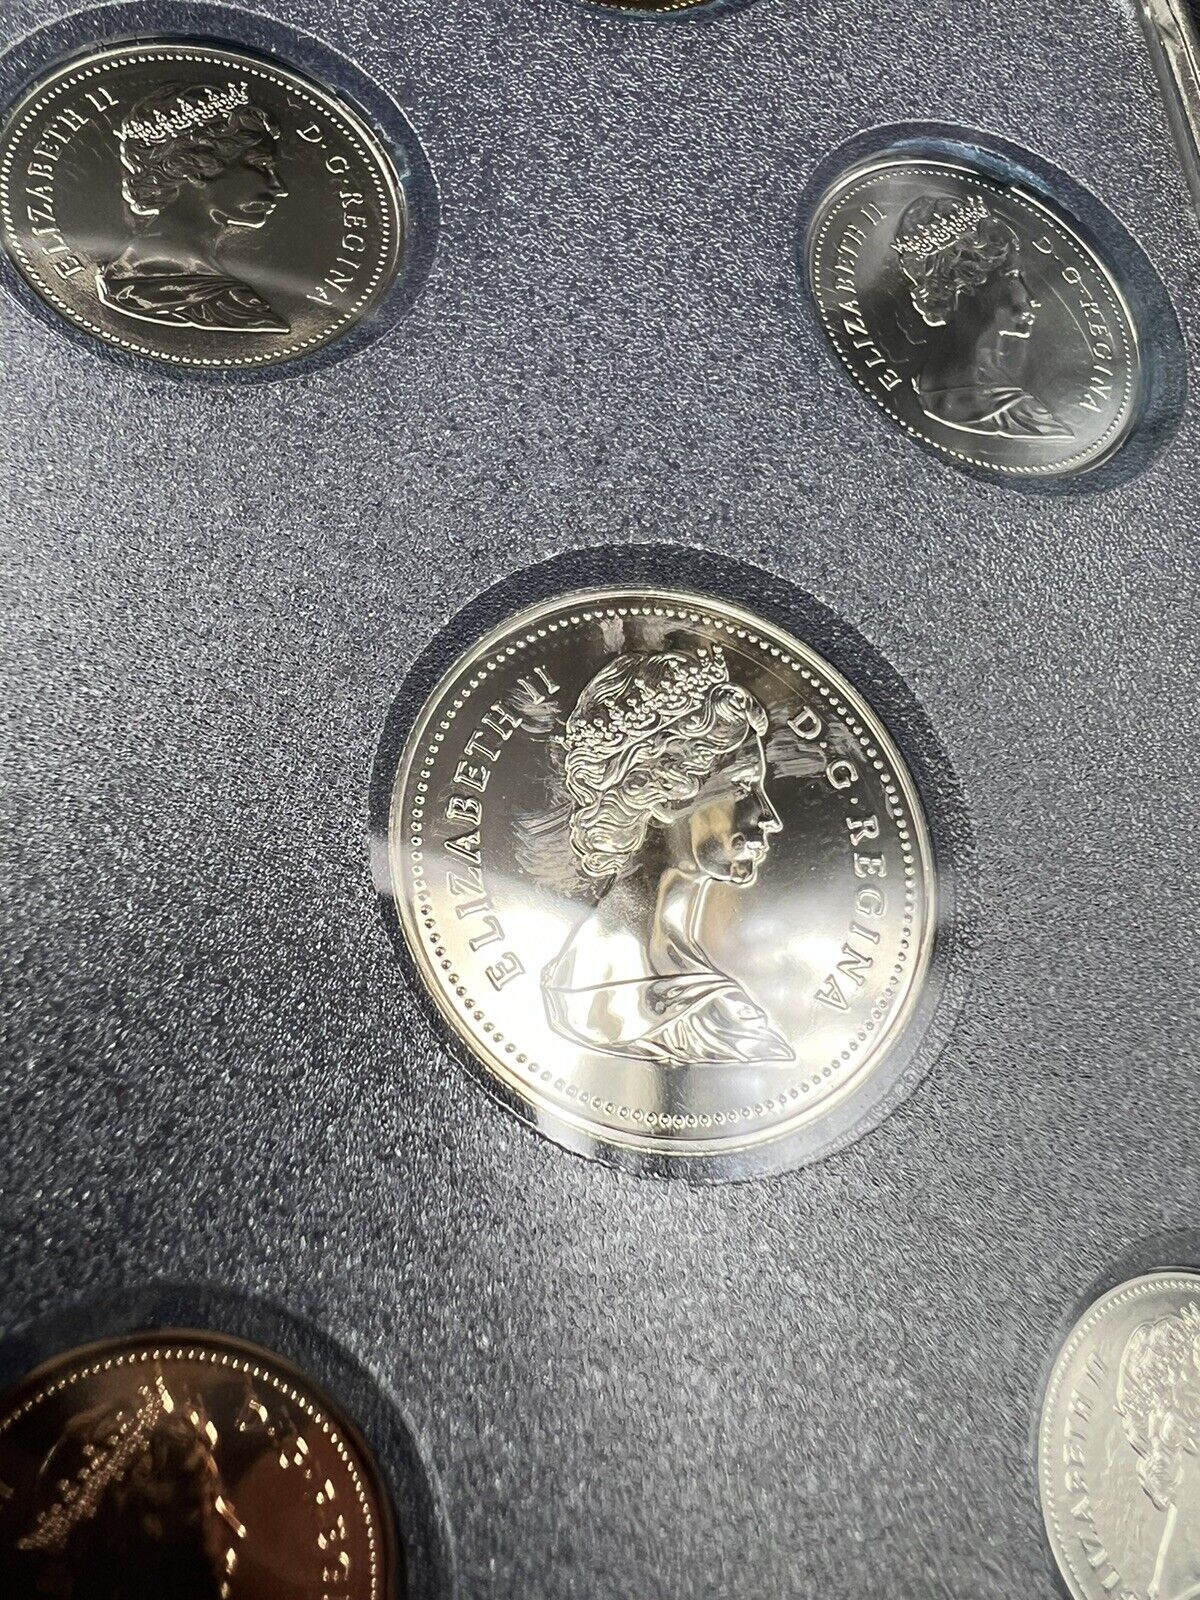 1988 Canada Specimen Set - Royal Canadian Mint Proof Like 6 Coins